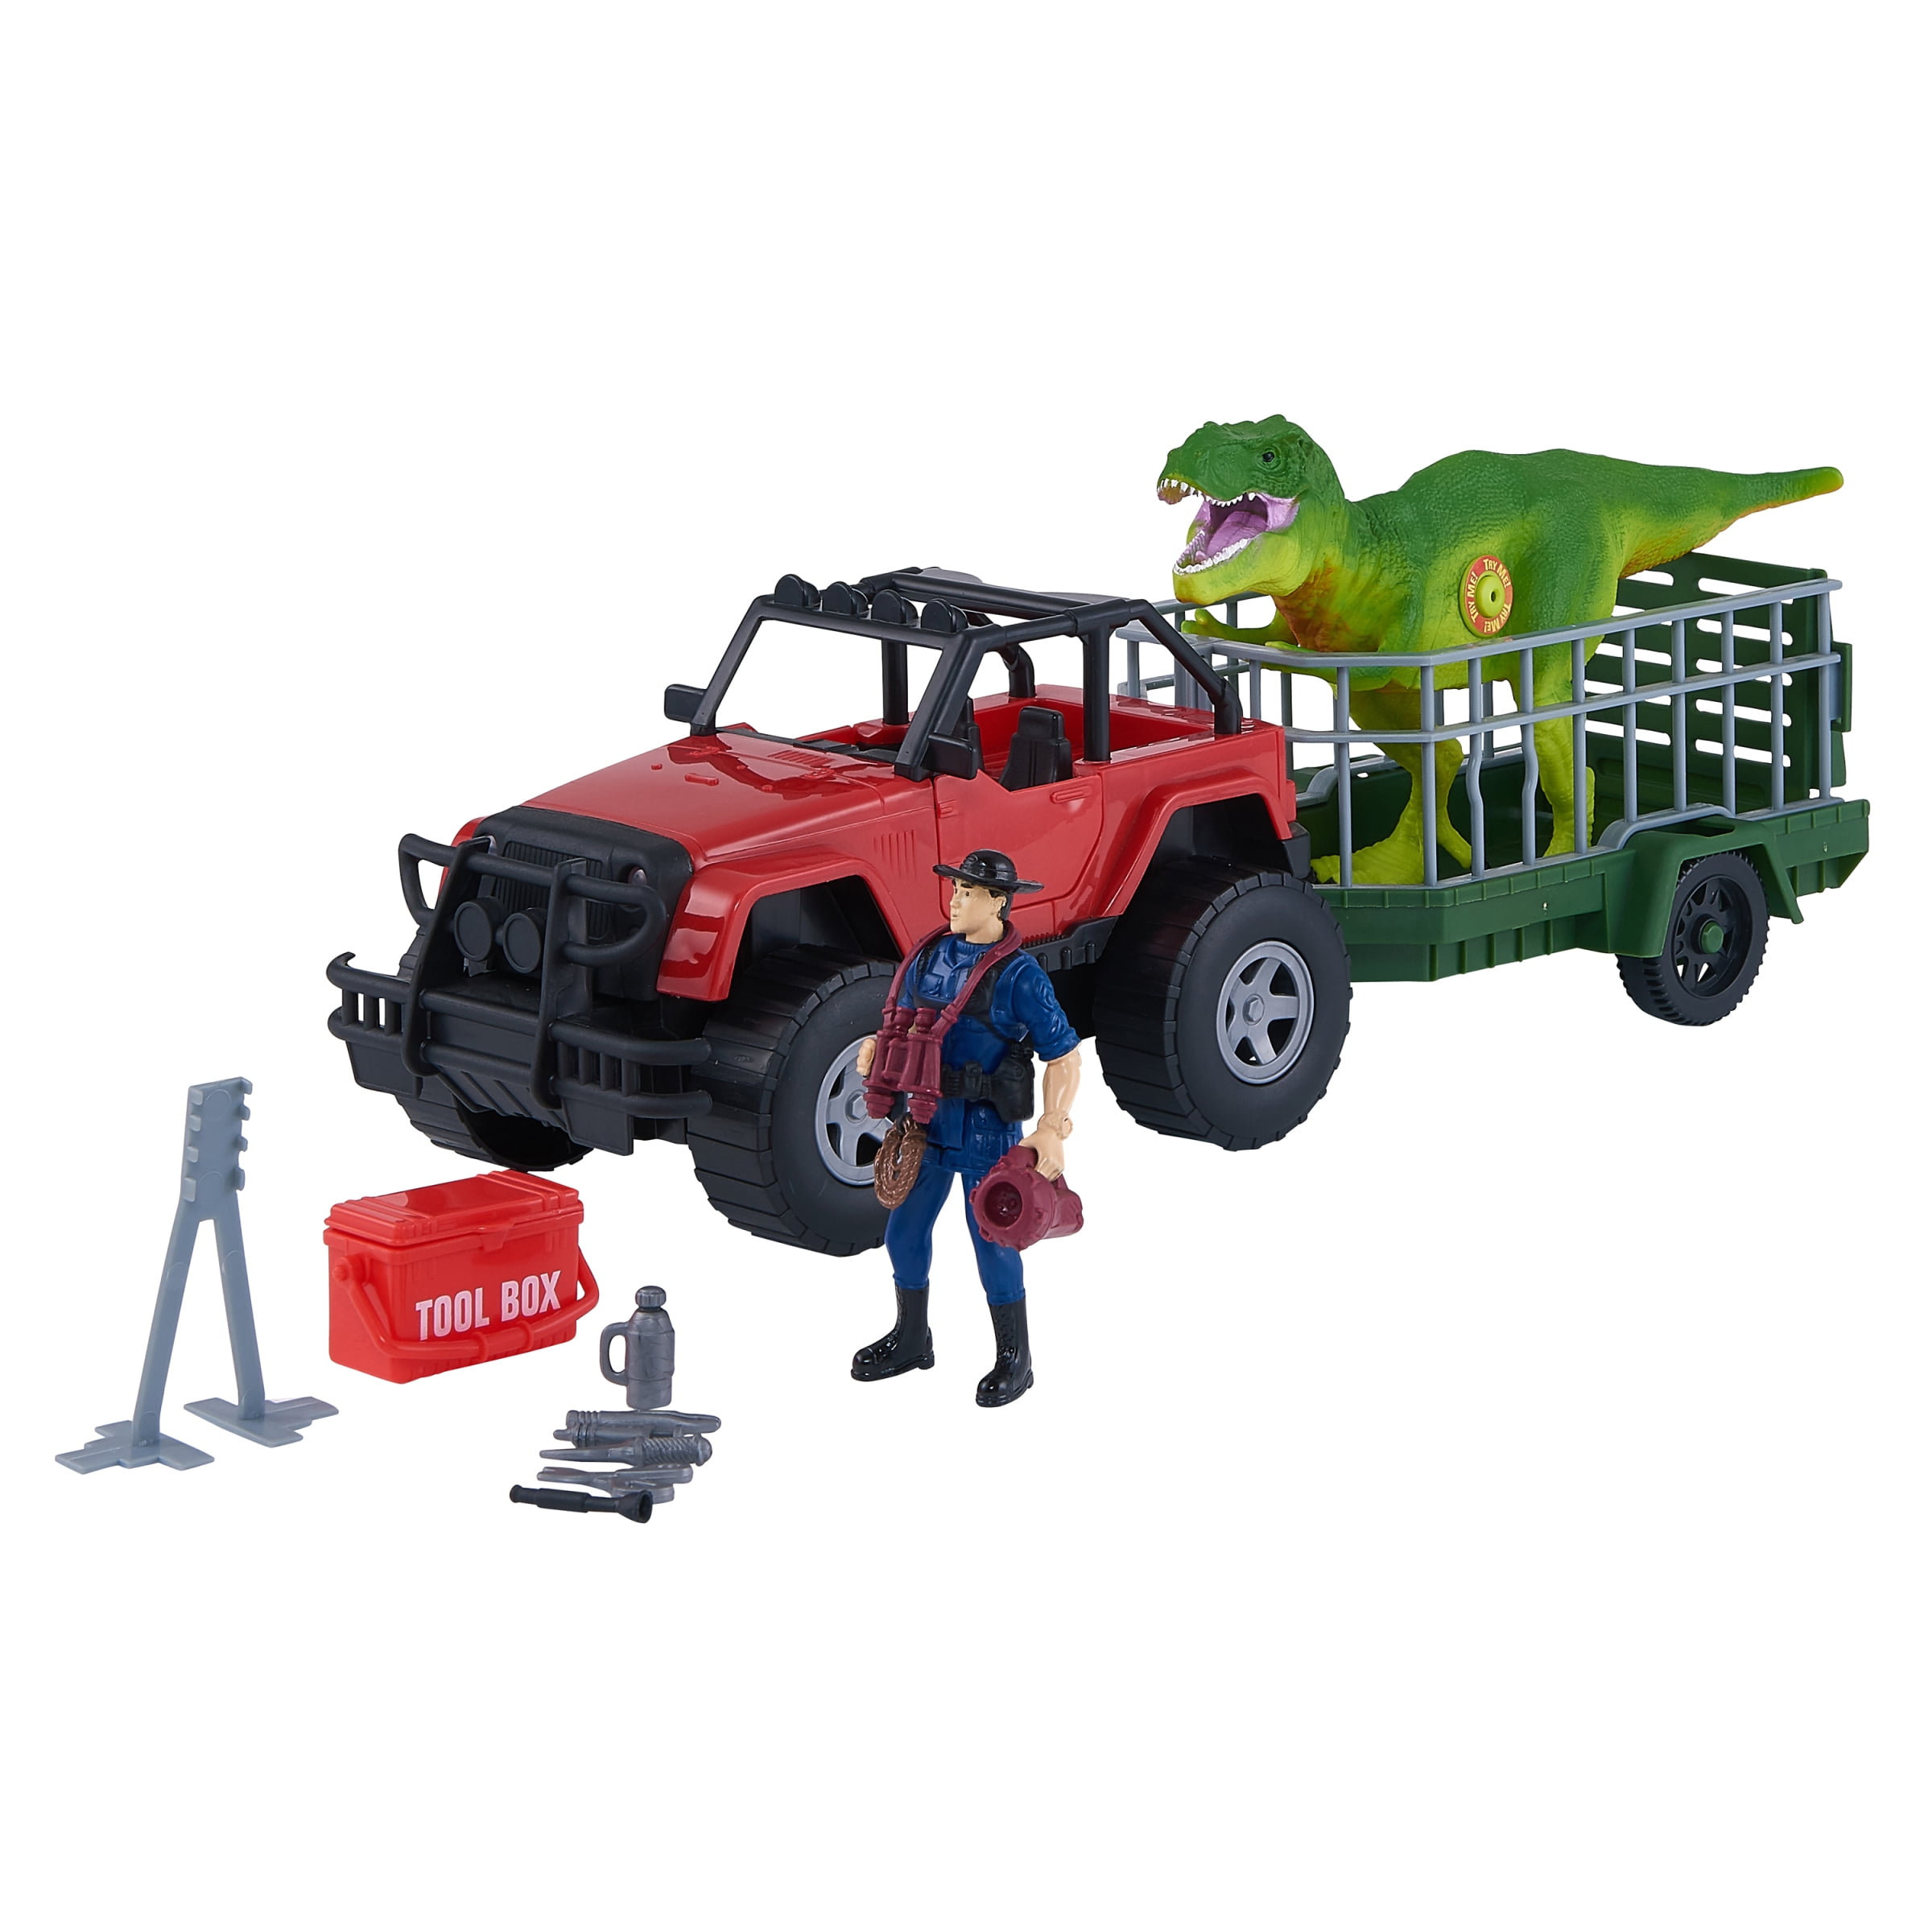 Adventure Force Angler Adventure Metal Orange Jeep Truck and Sport Boat  Vehicle Playset (10 Pieces) - Walmart.com